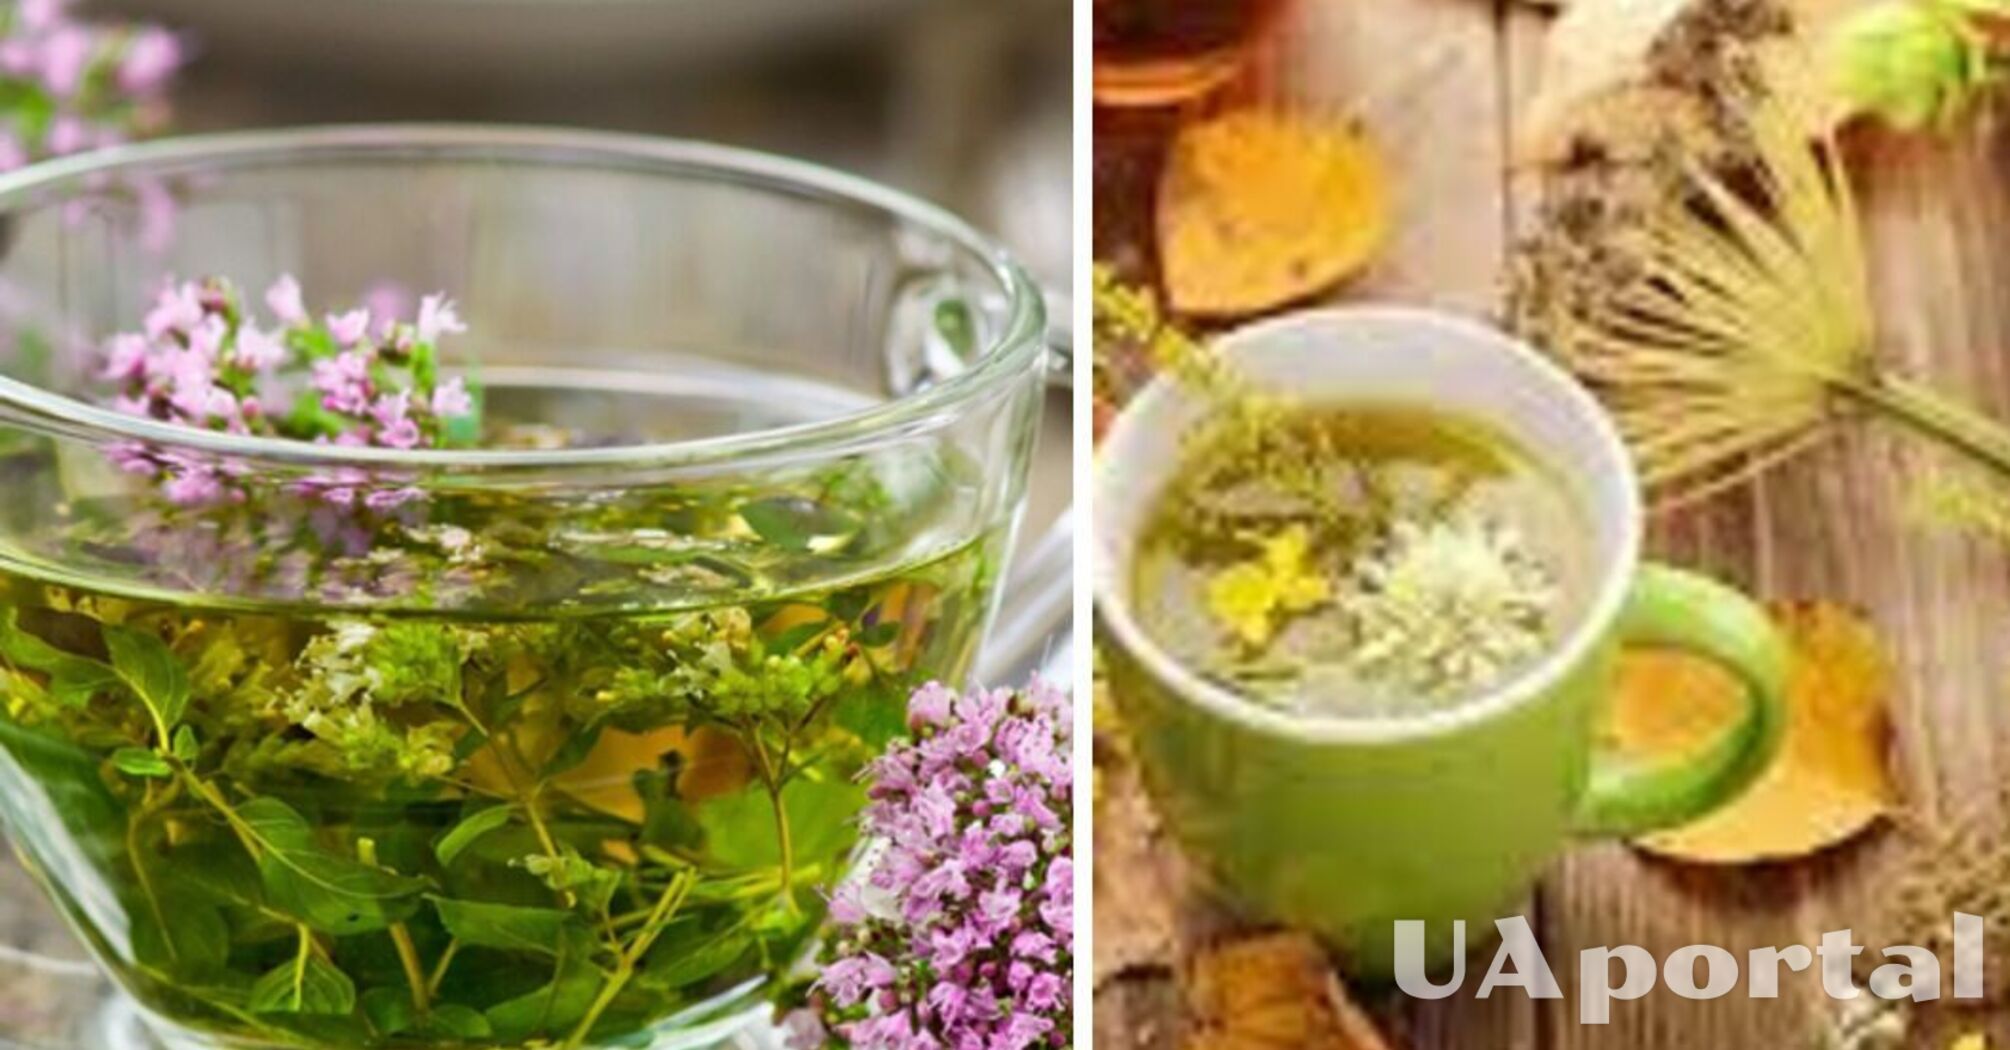 How to choose herbal tea harmlessly: useful tips